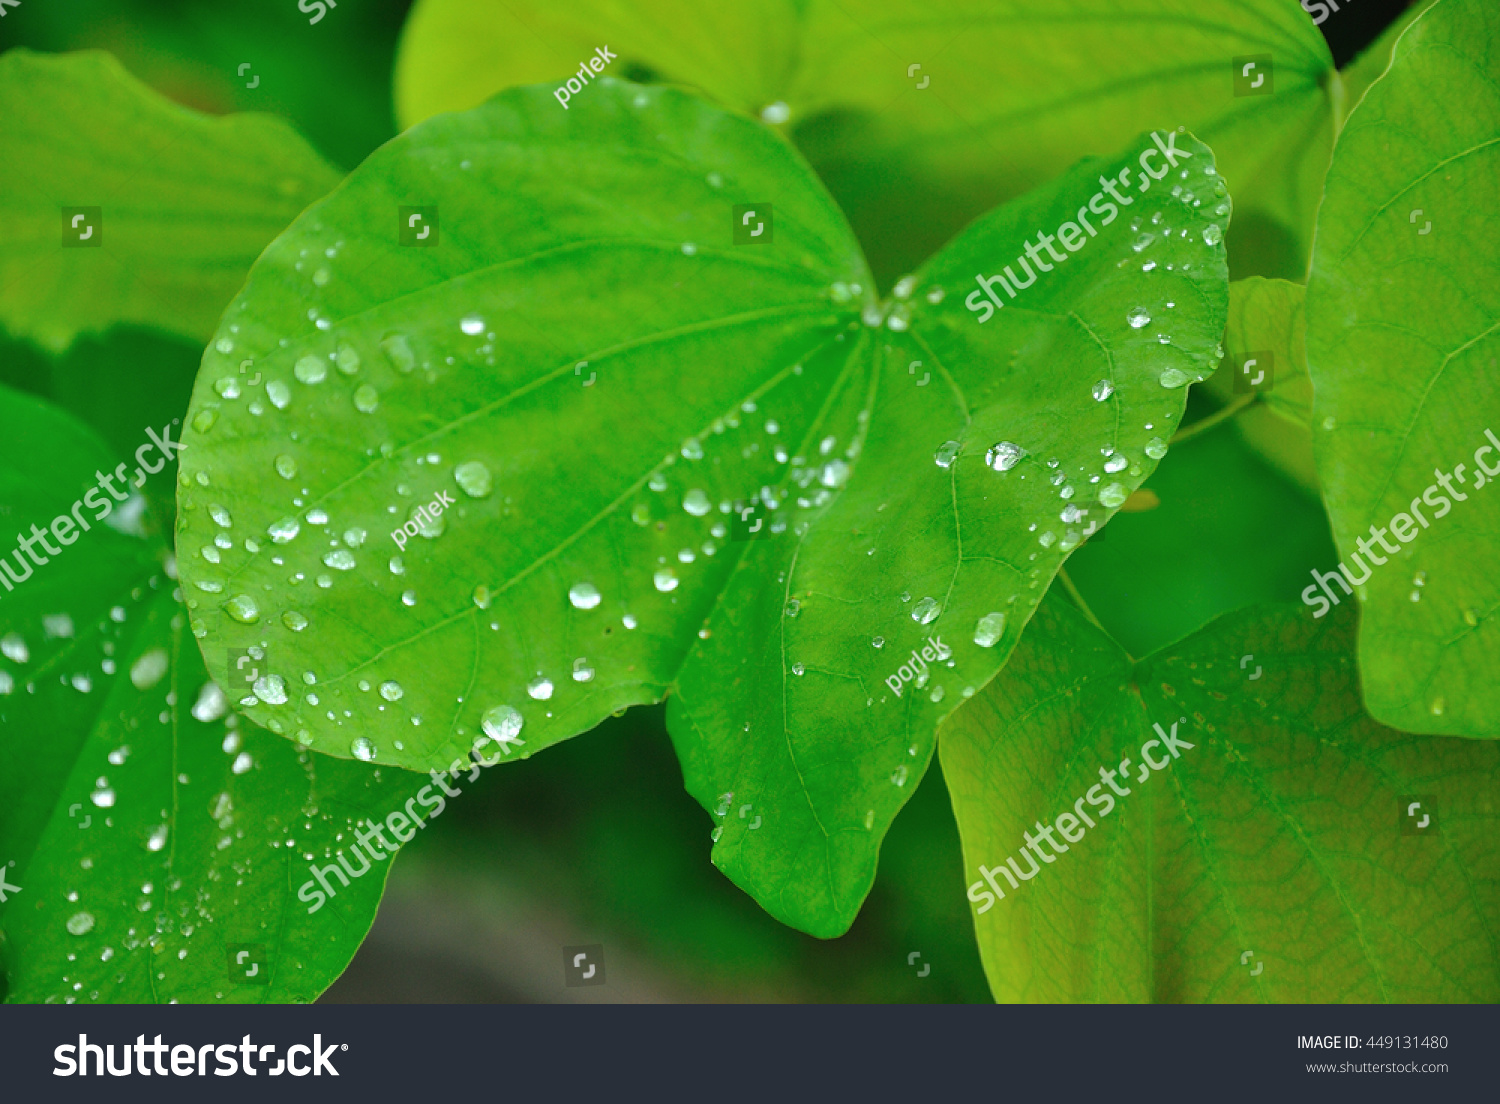 Dew on leaves #449131480